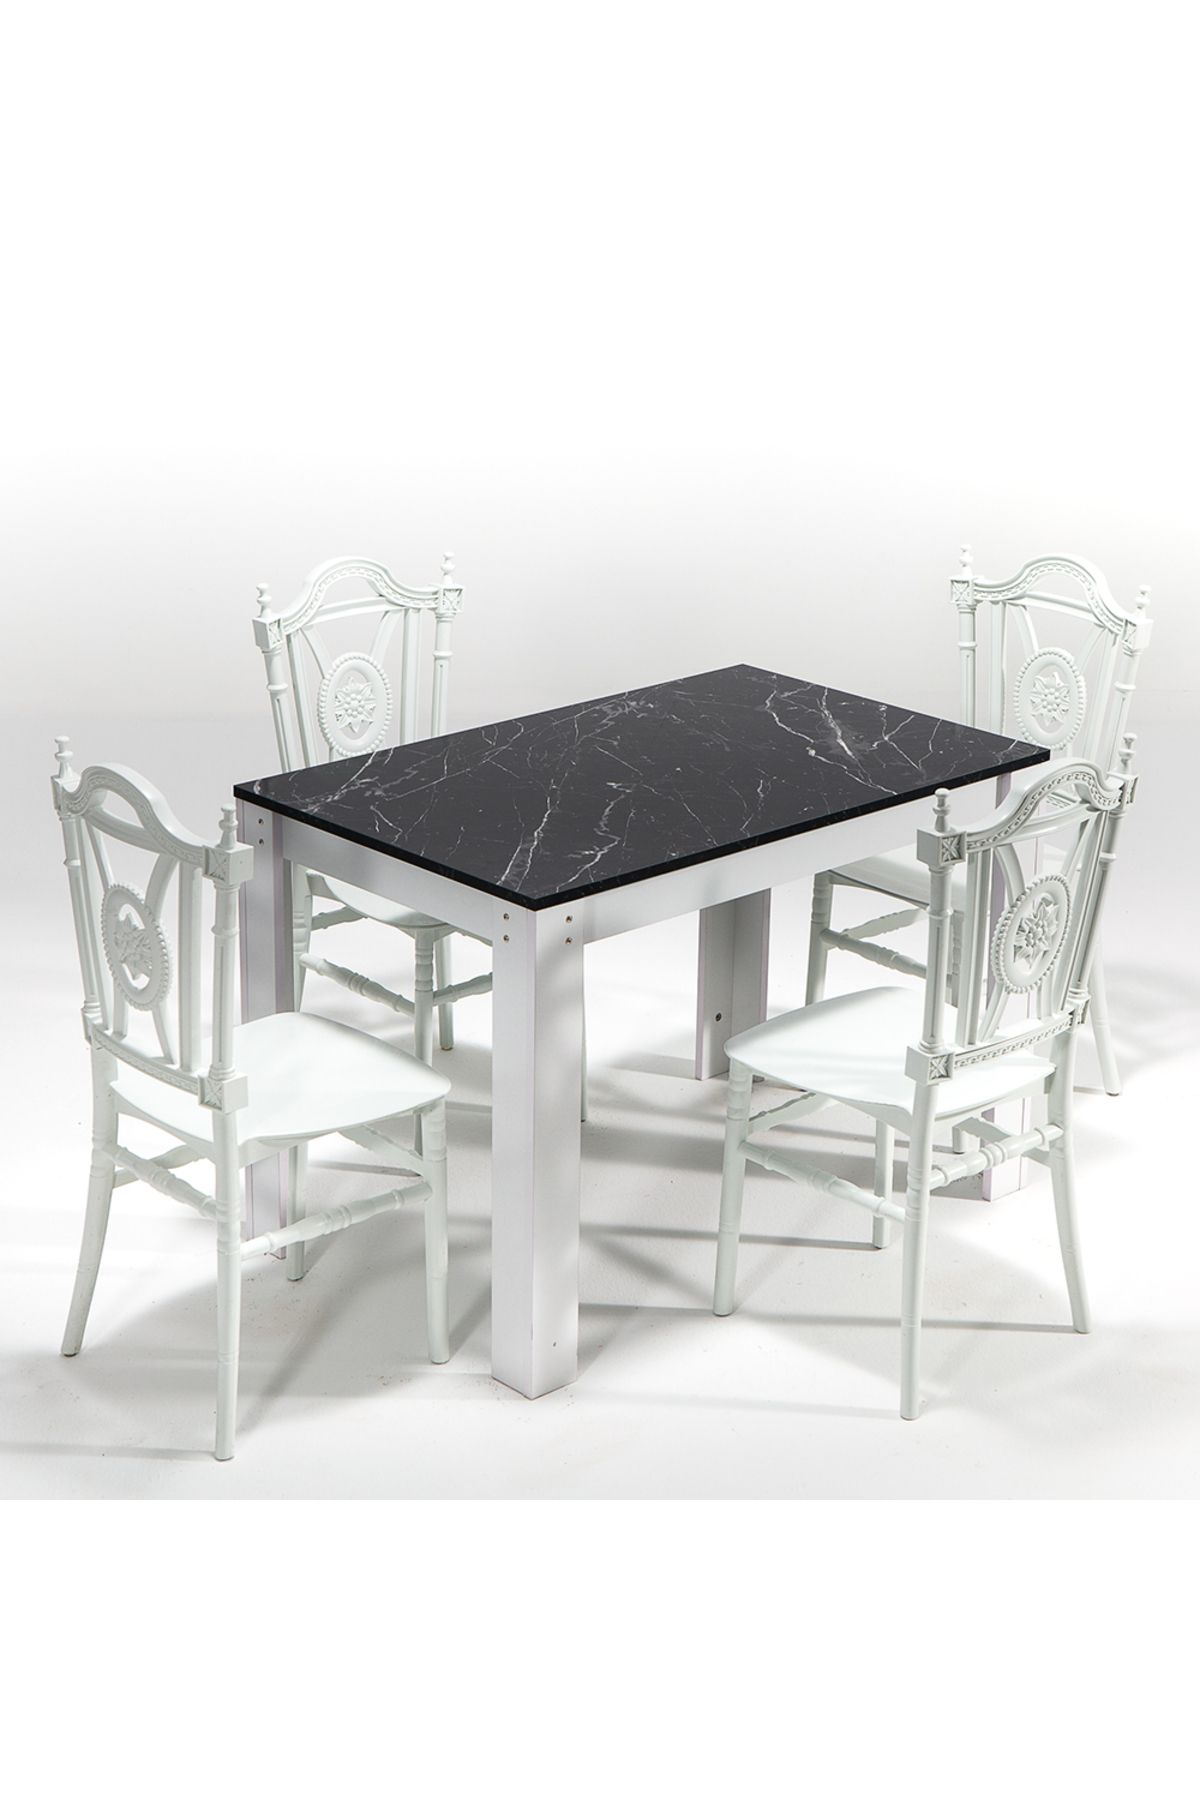 MOBETTO Mirage / Keops Mutfak Masa Takımı 4 Sandalye 1 Masa - Beyaz